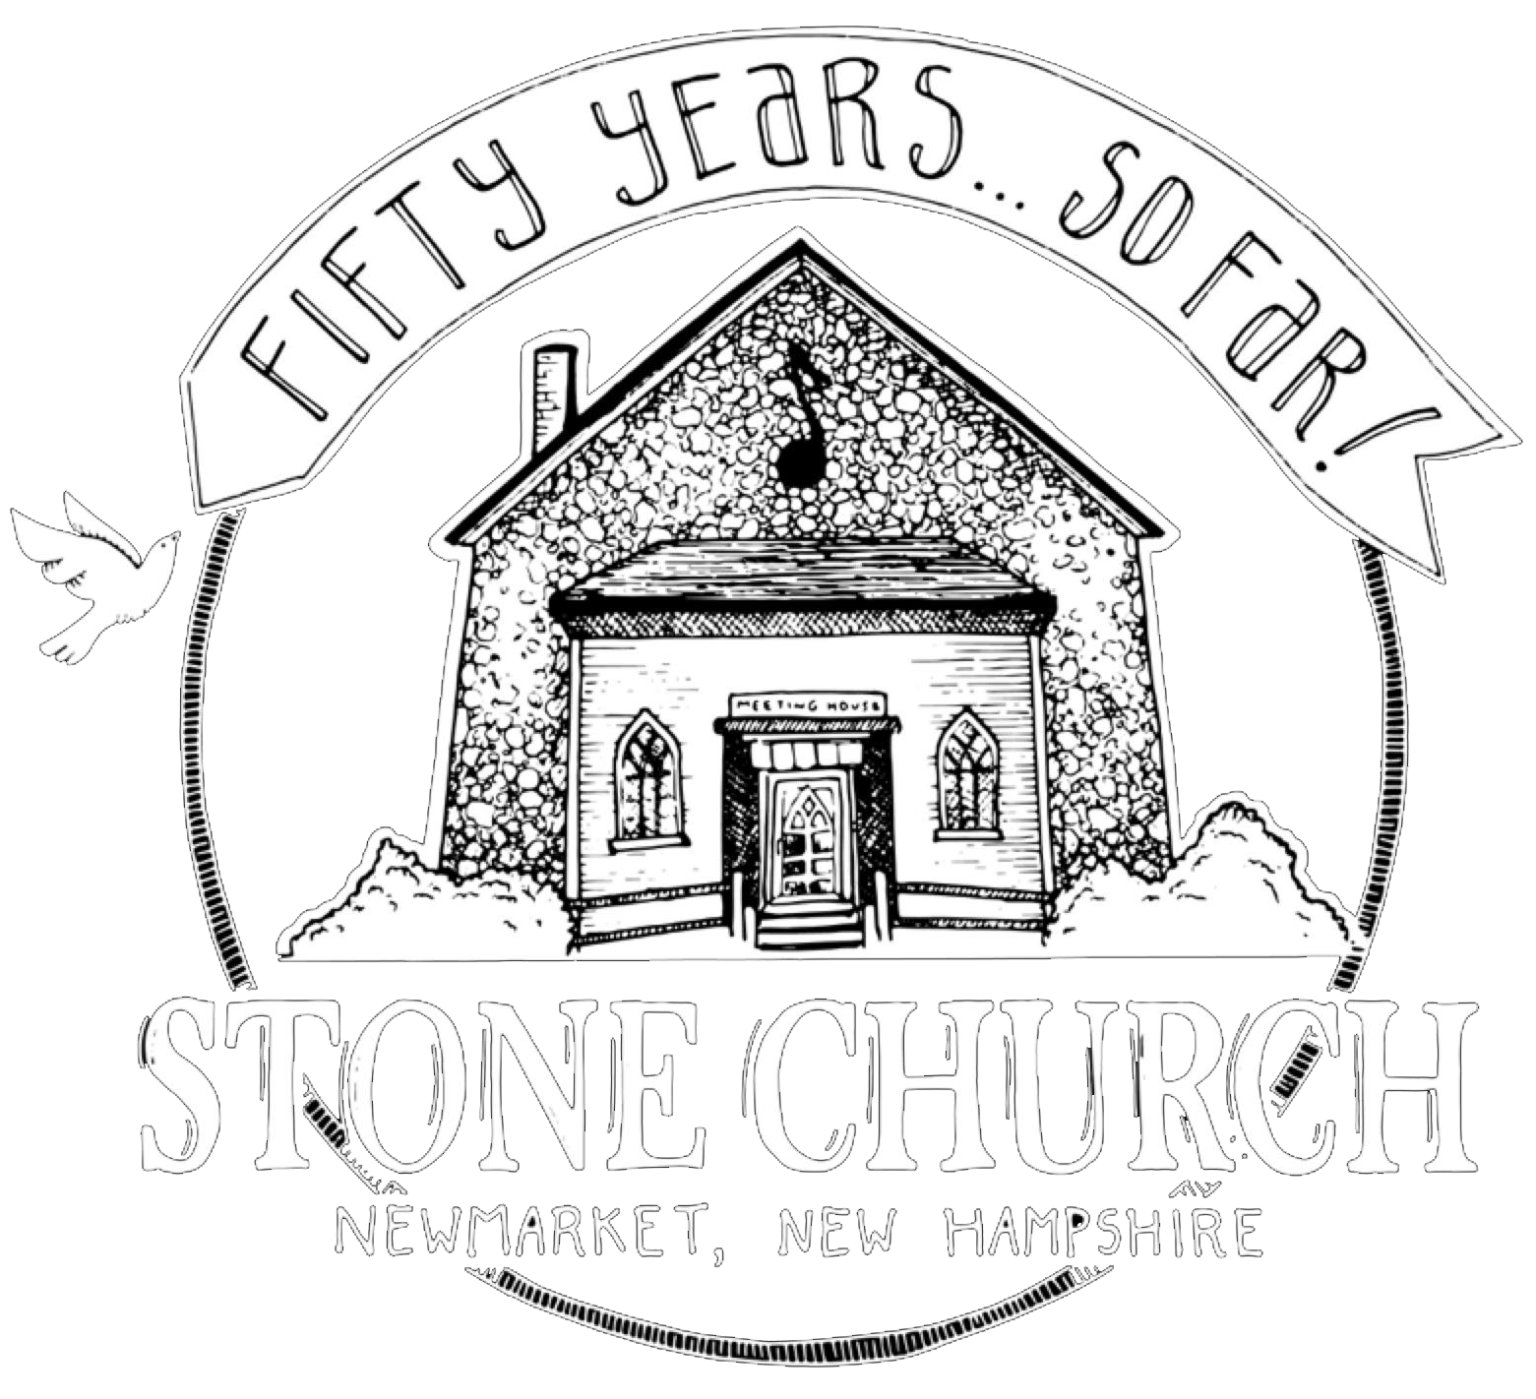 Calendar The Stone Church